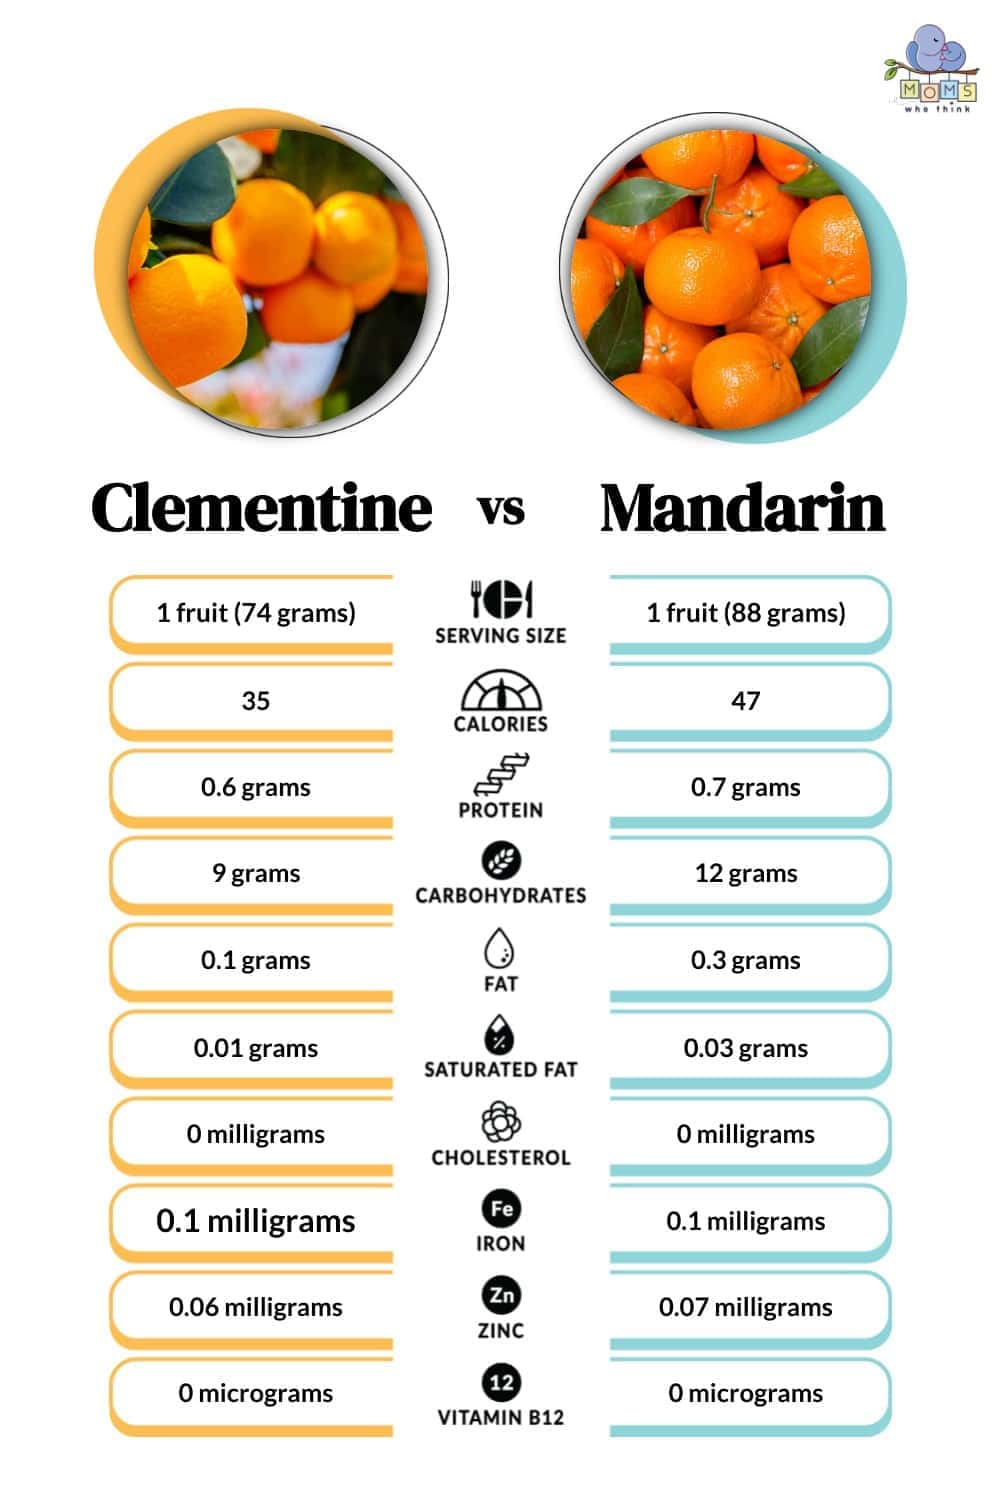 Tangerines vs. Mandarins: The Sweet Showdown of Similarities and